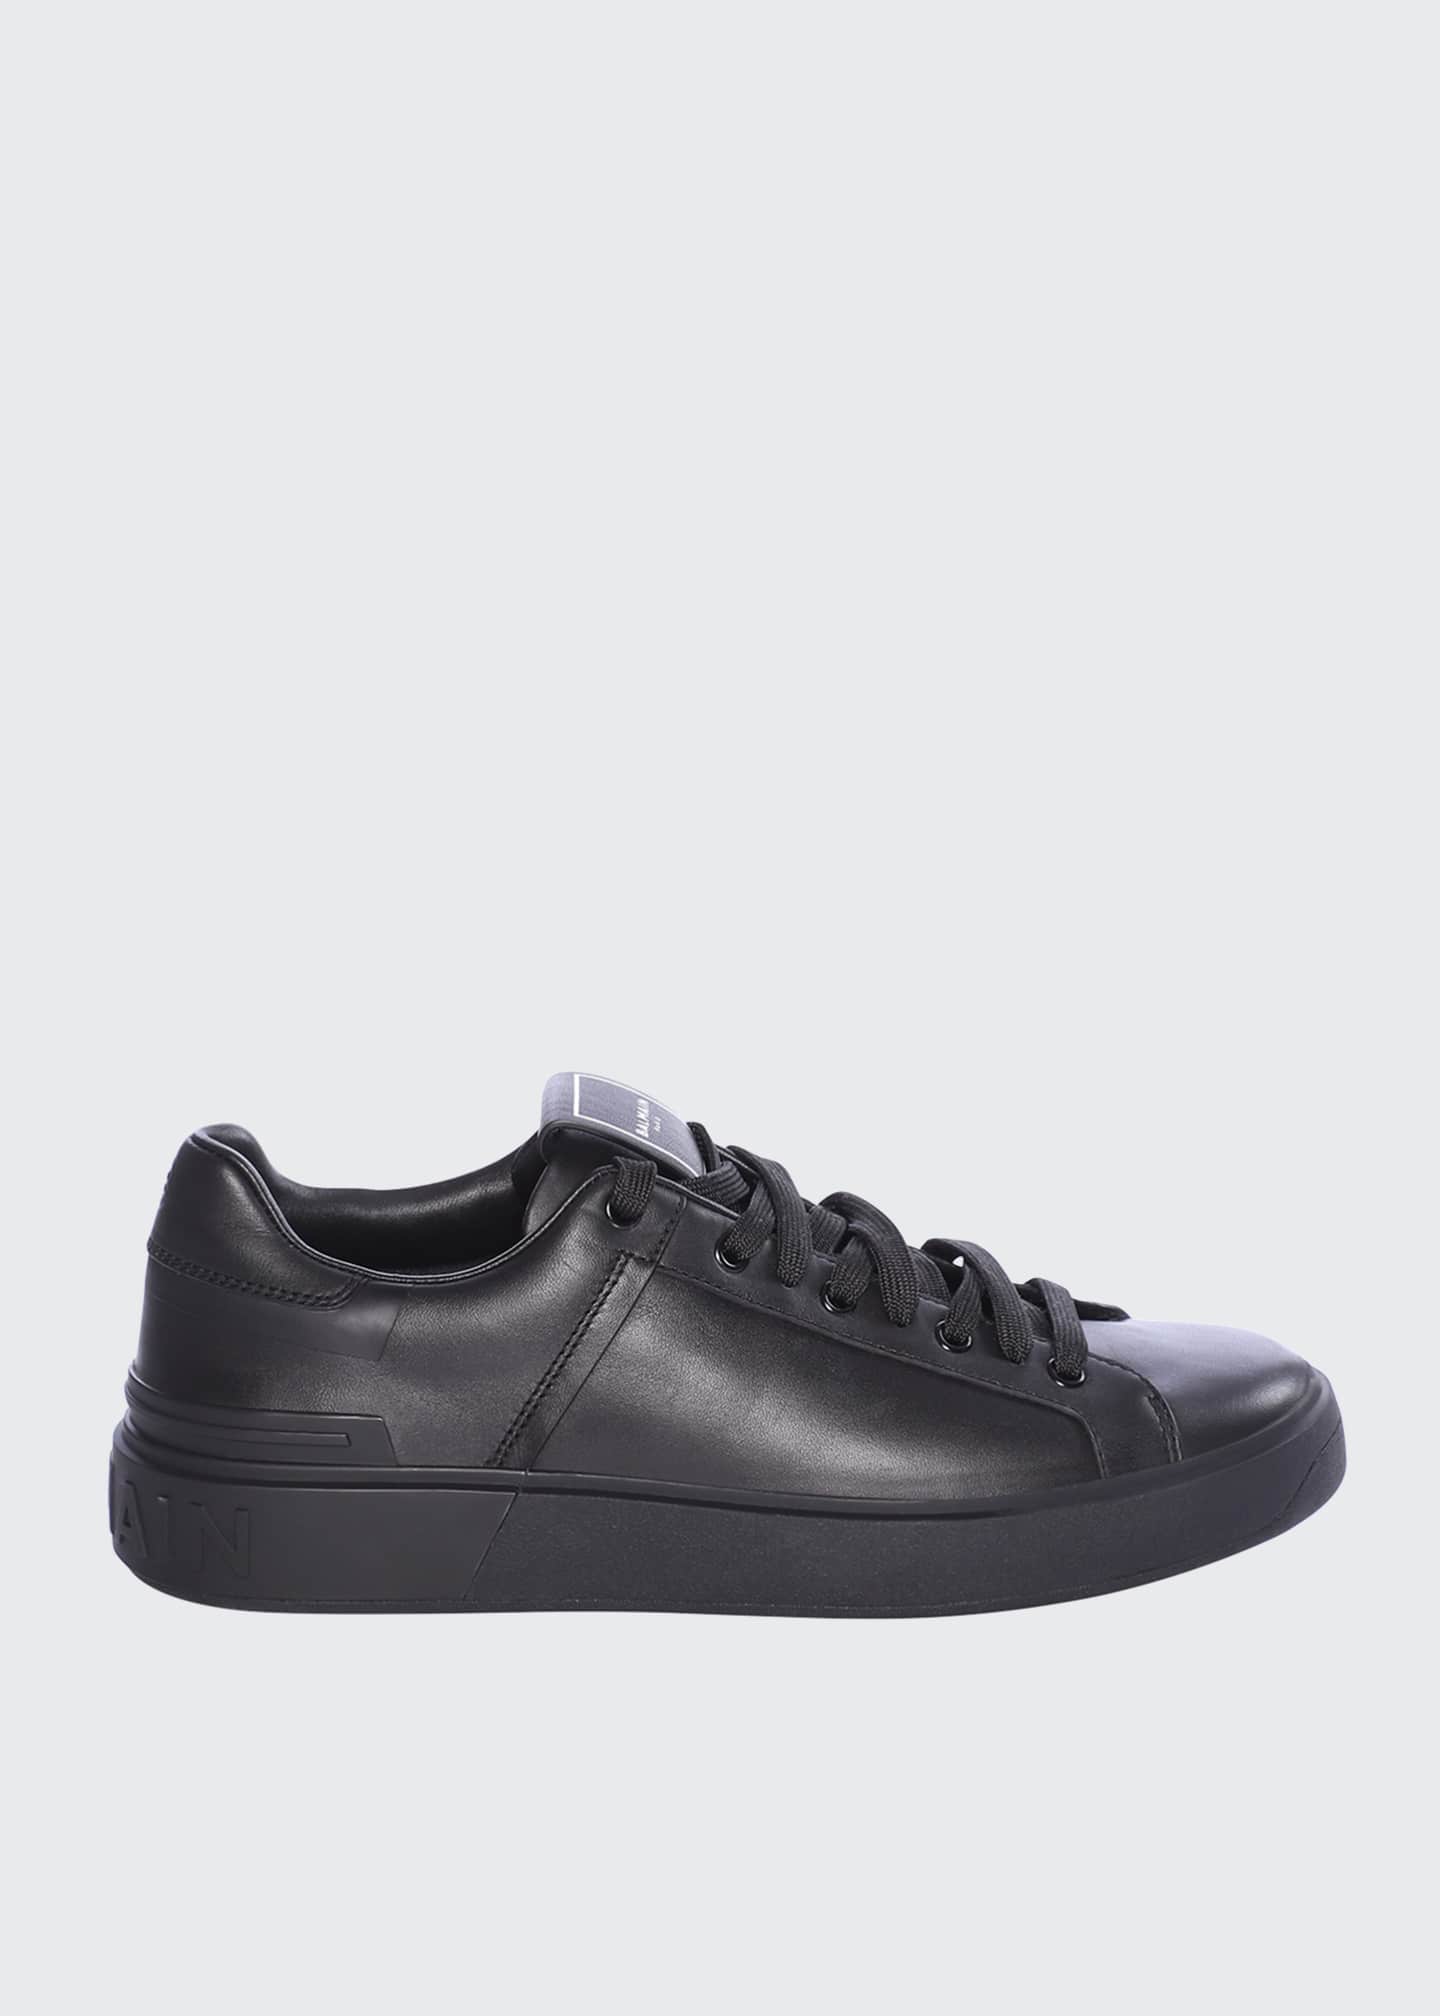 Balmain Men's B Court Leather Low-Top Sneakers - Bergdorf Goodman